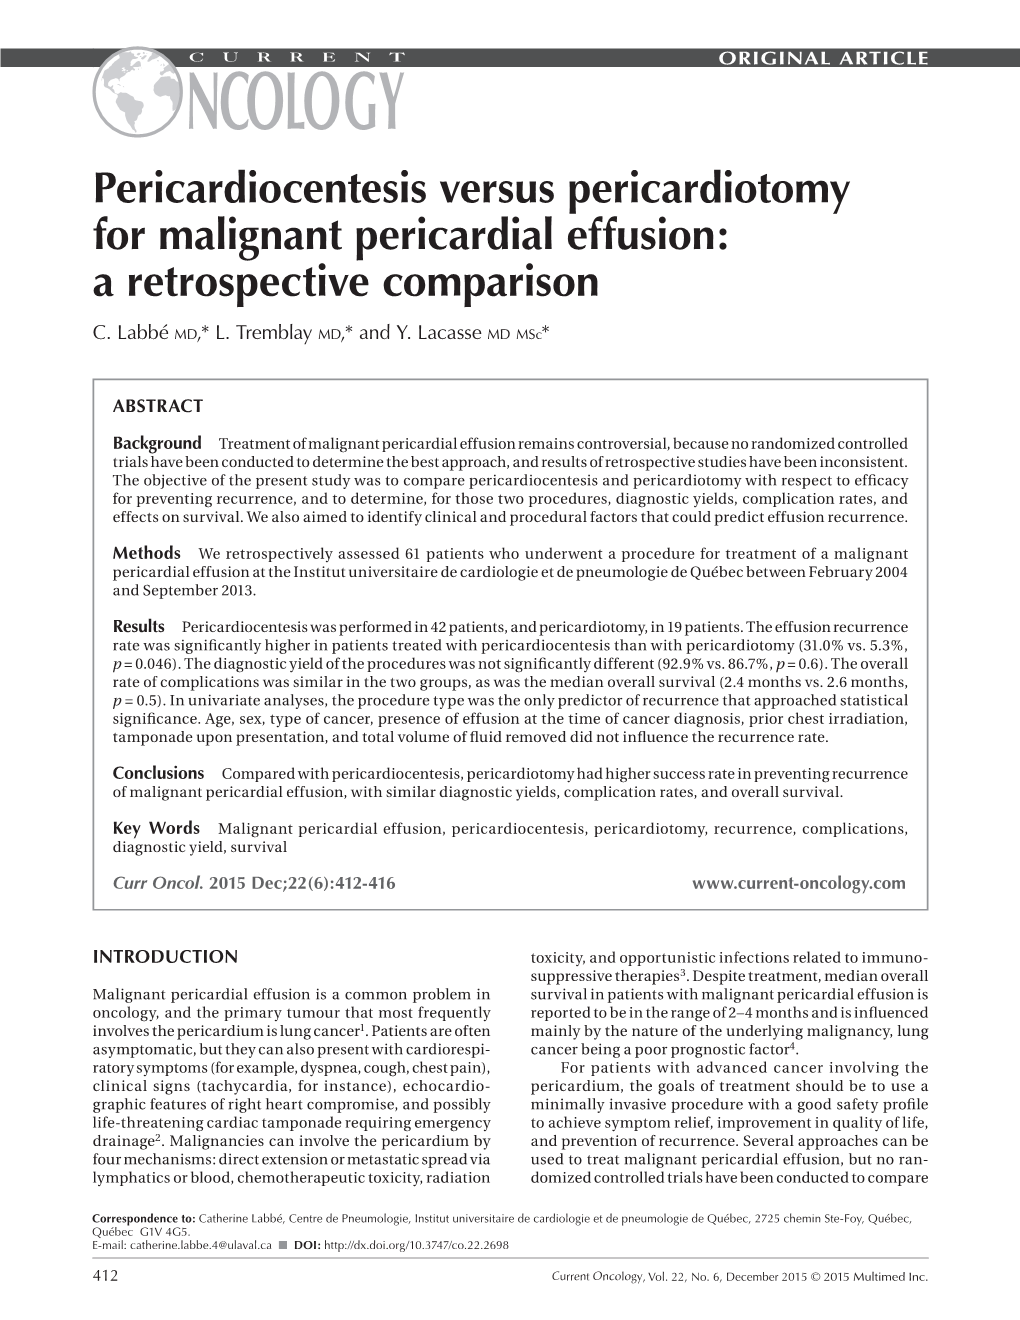 Pericardiocentesis Versus Pericardiotomy for Malignant Pericardial Effusion: a Retrospective Comparison